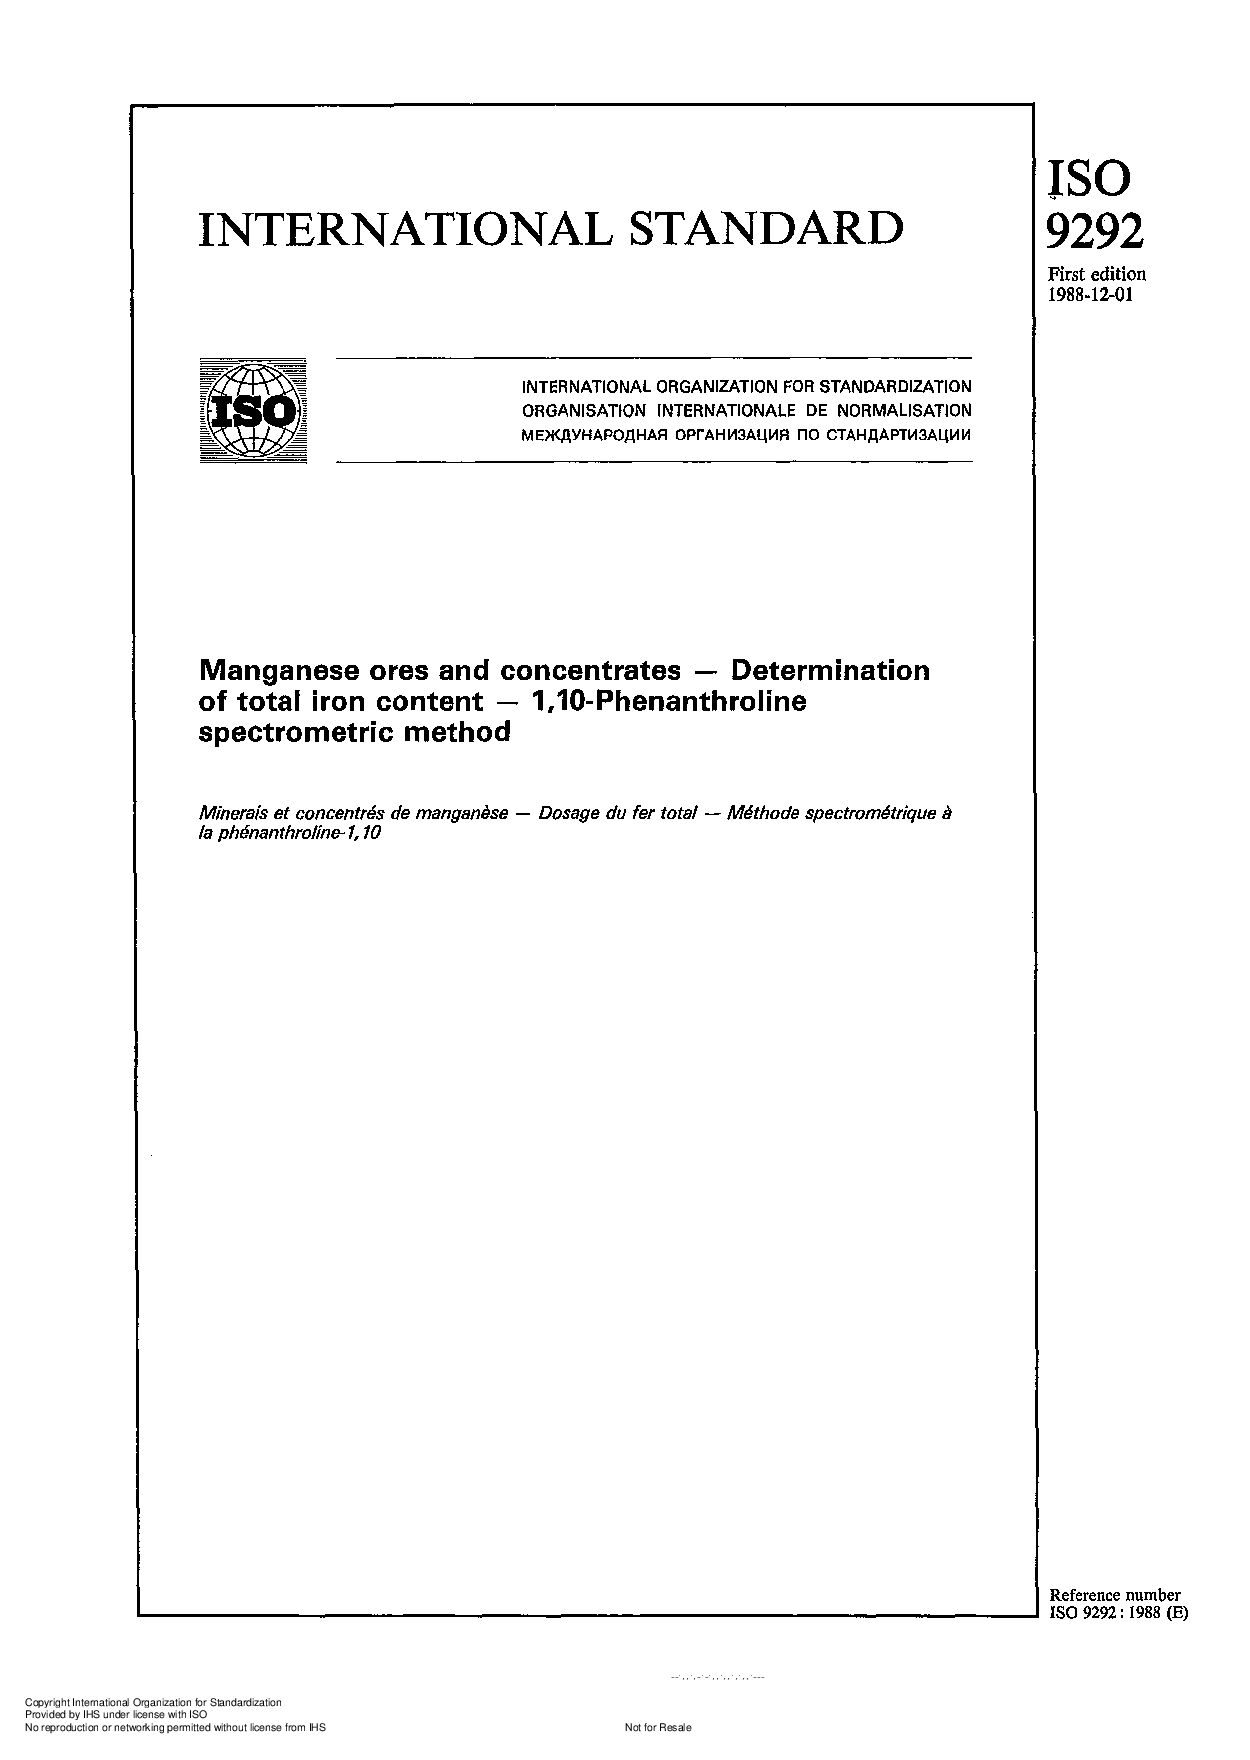 ISO 9292:1988封面图